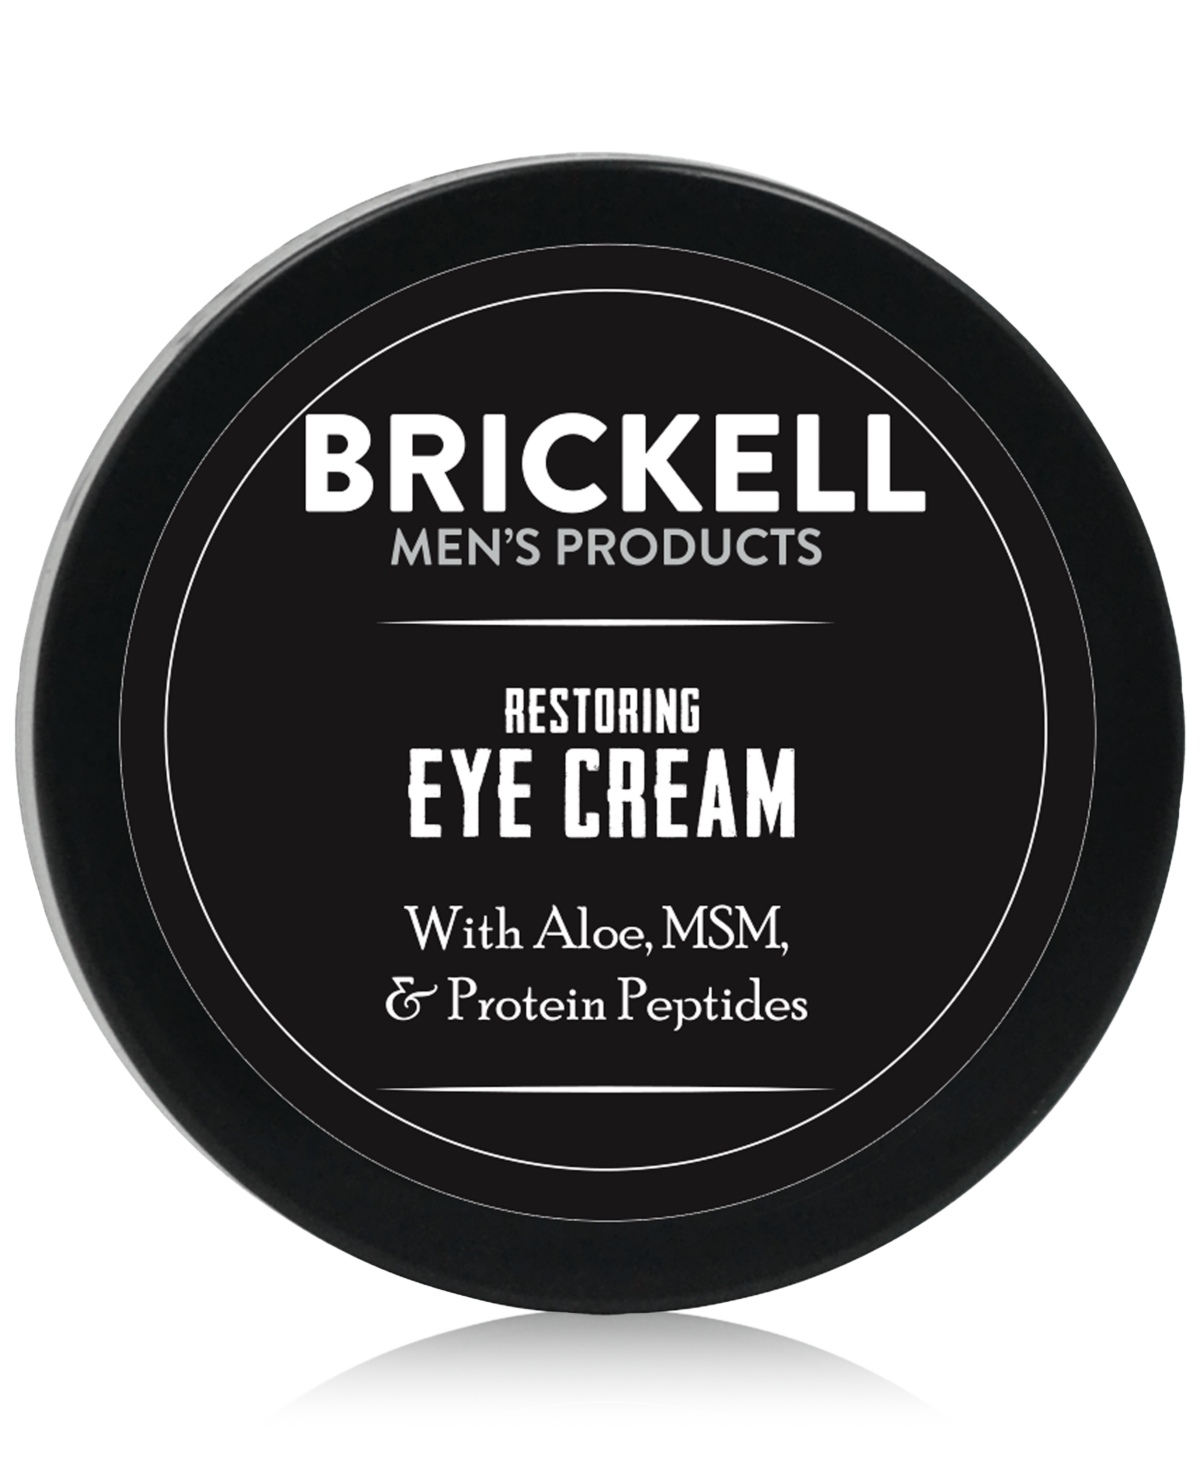 Brickell Mens Products Brickell Men's Products Restoring Eye Cream, 0.5 Oz.